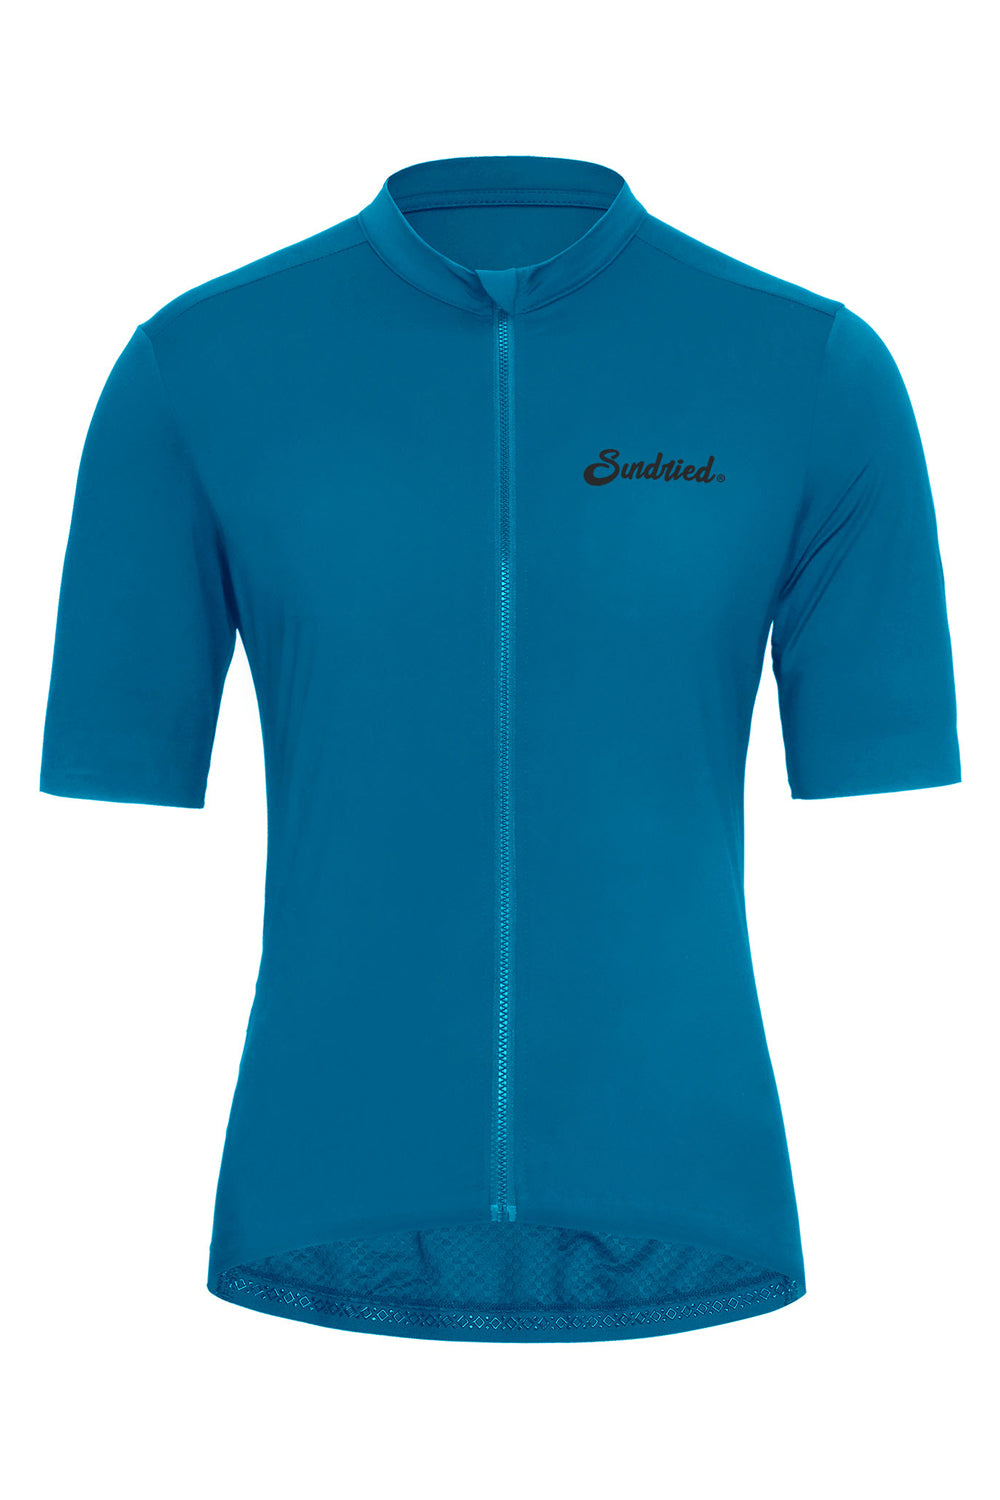 Sundried Sport Pianura Men's Blue Short Sleeve Cycle Jersey Short Sleeve Jersey S SS1001 S Blue Activewear